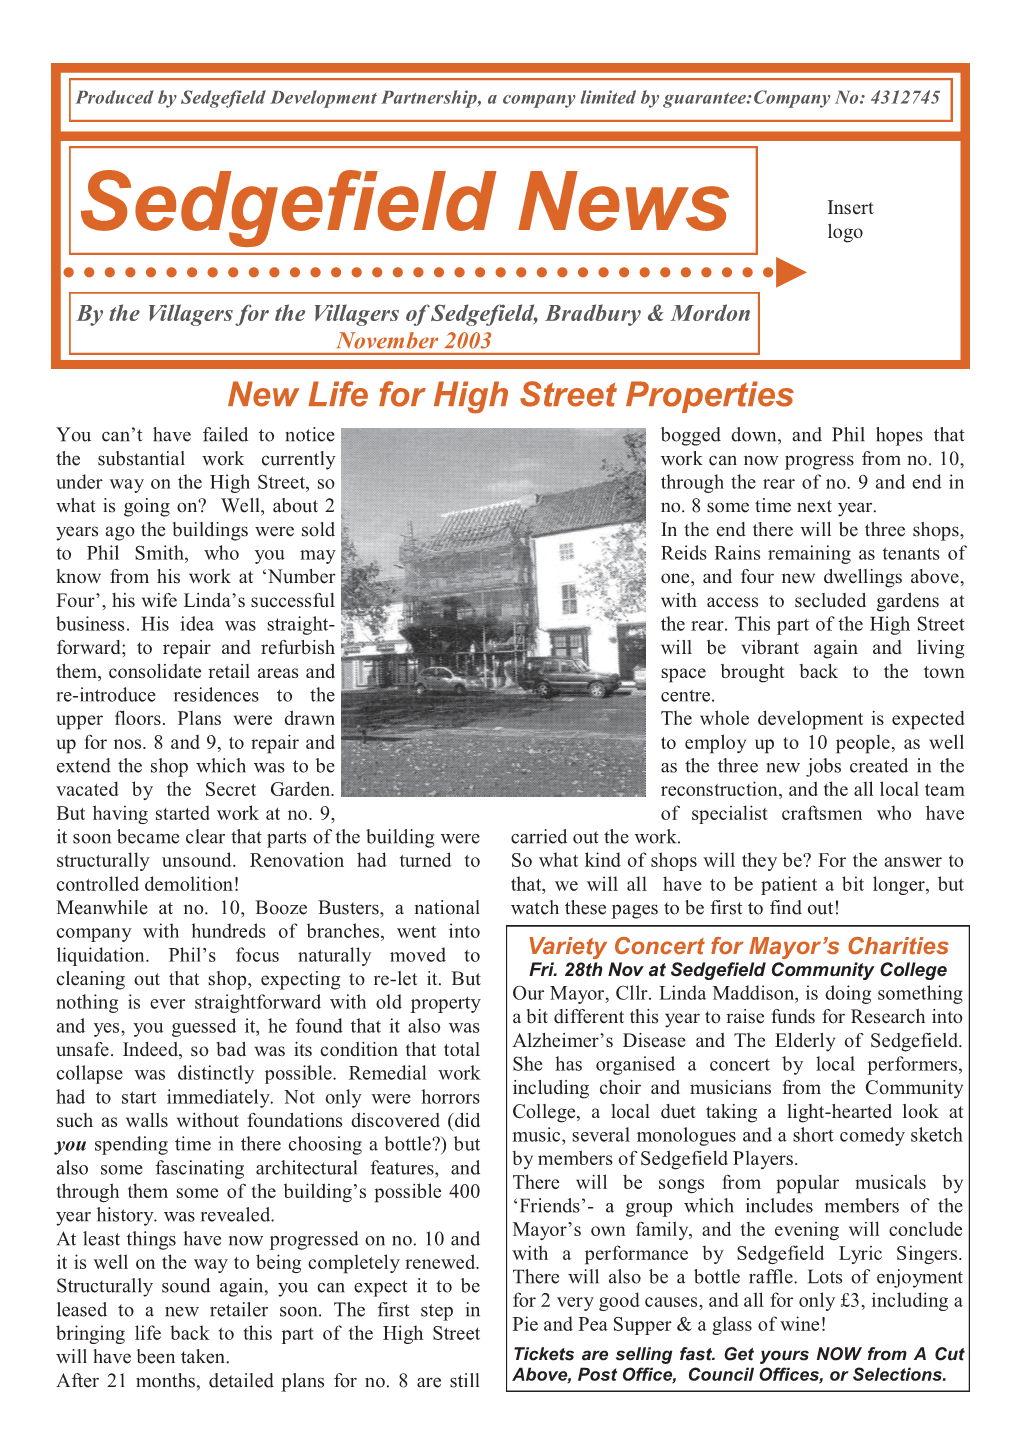 Sedgefield News Distribution